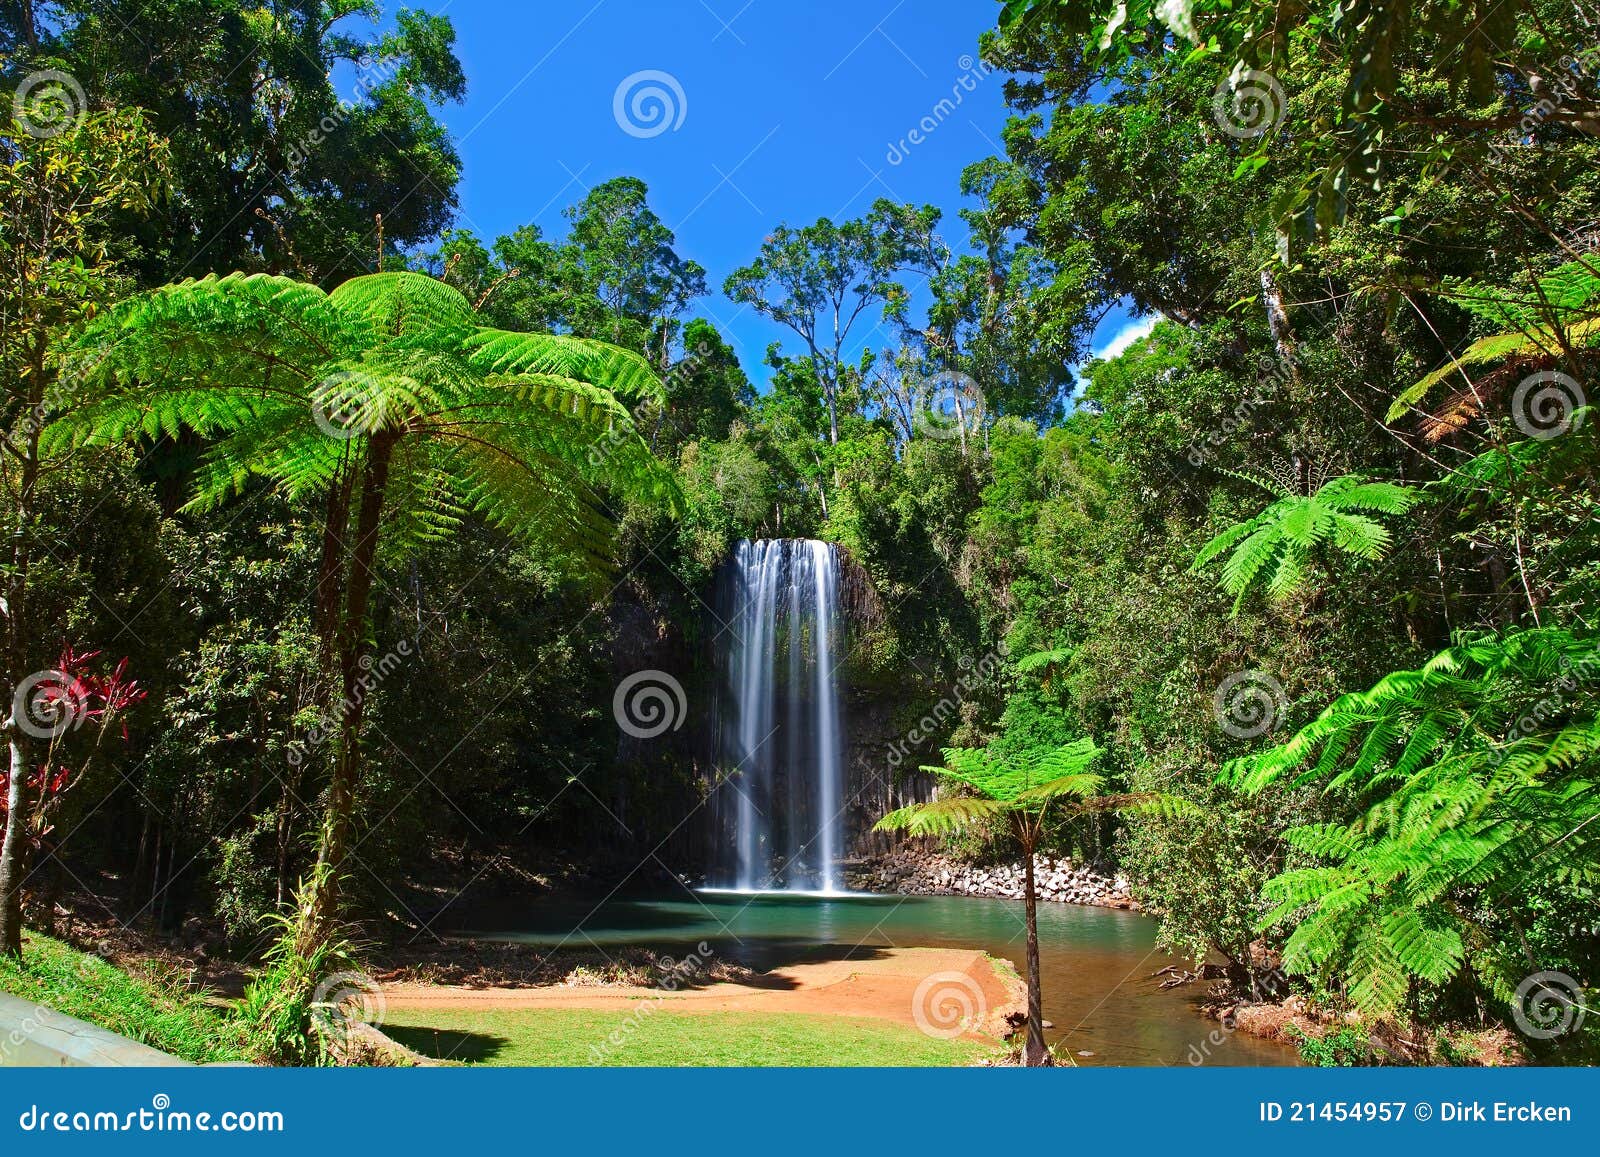 tree fern waterfall tropical rain forest paradise